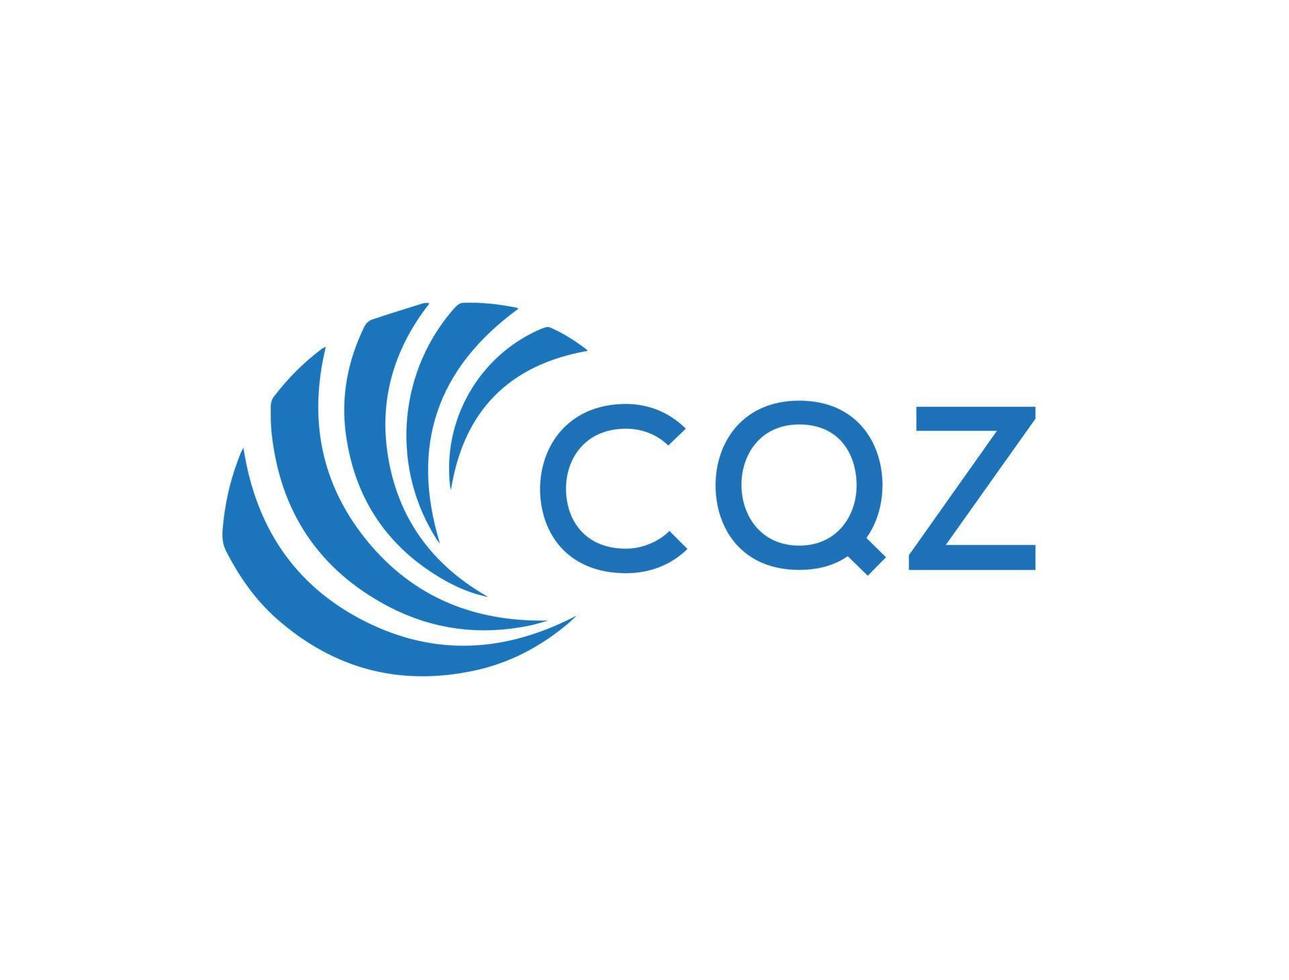 cqz brief logo ontwerp op zwarte achtergrond. cqz creatieve initialen brief logo concept. cqz brief ontwerp. vector